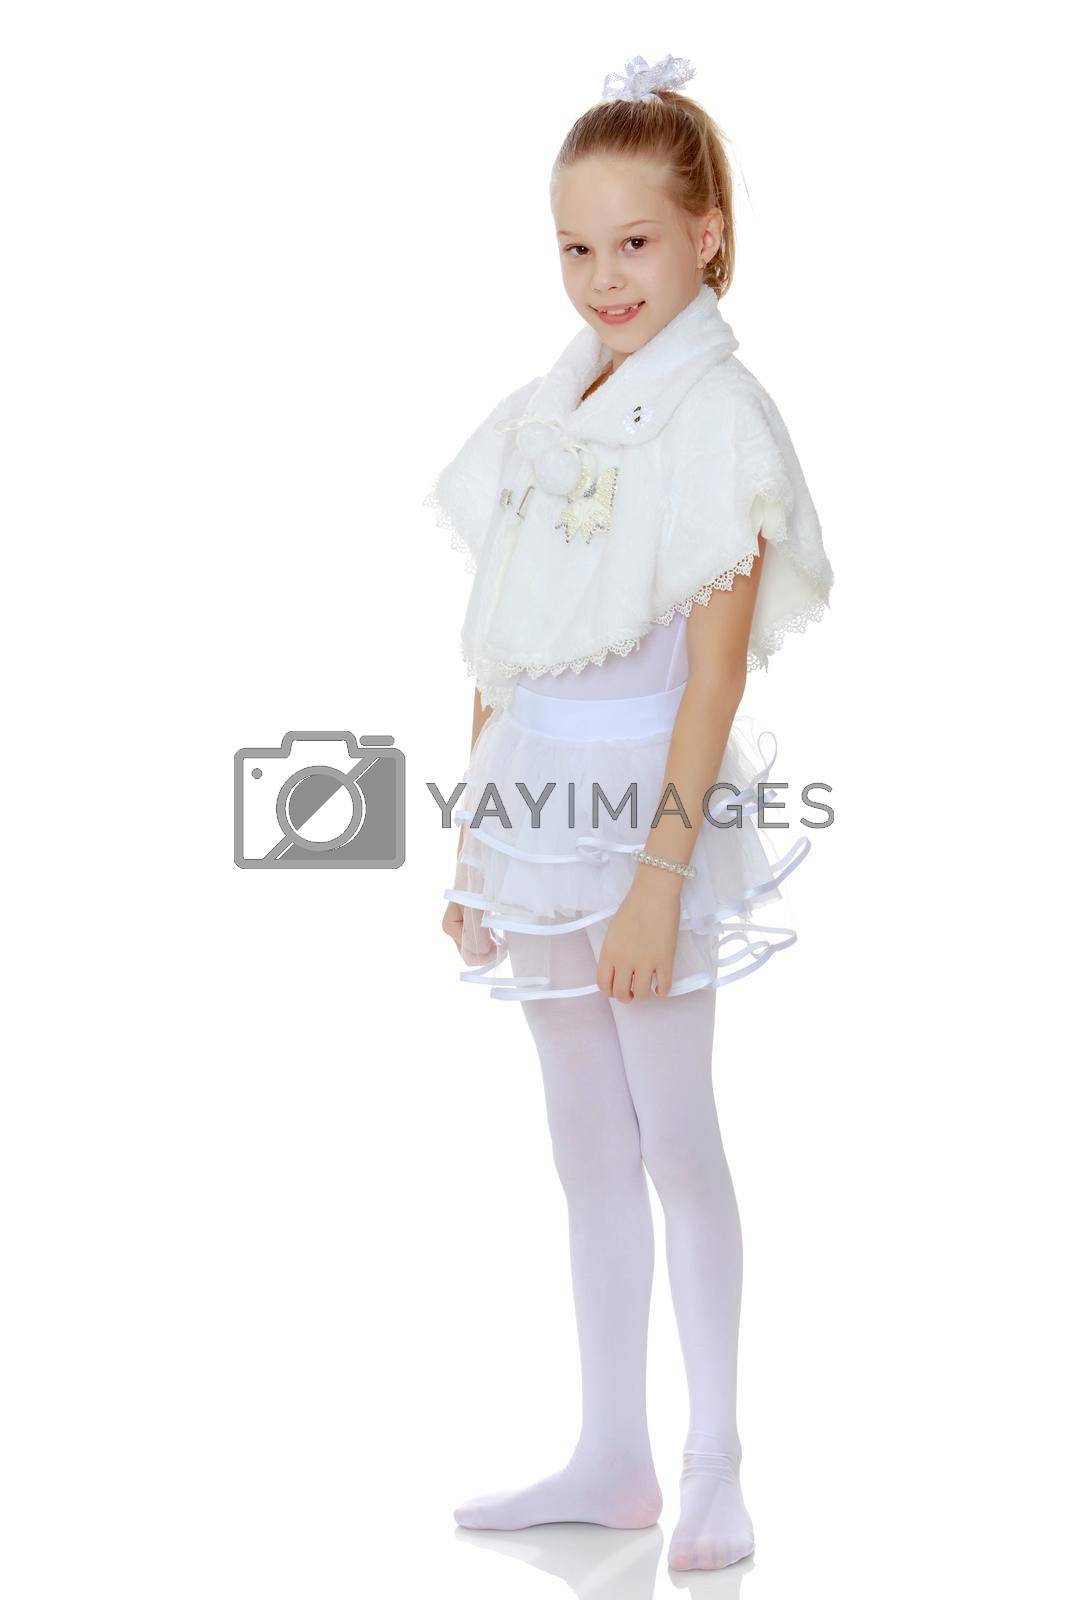 Royalty free image of Little girl in gymnastics leotard. by kolesnikov_studio